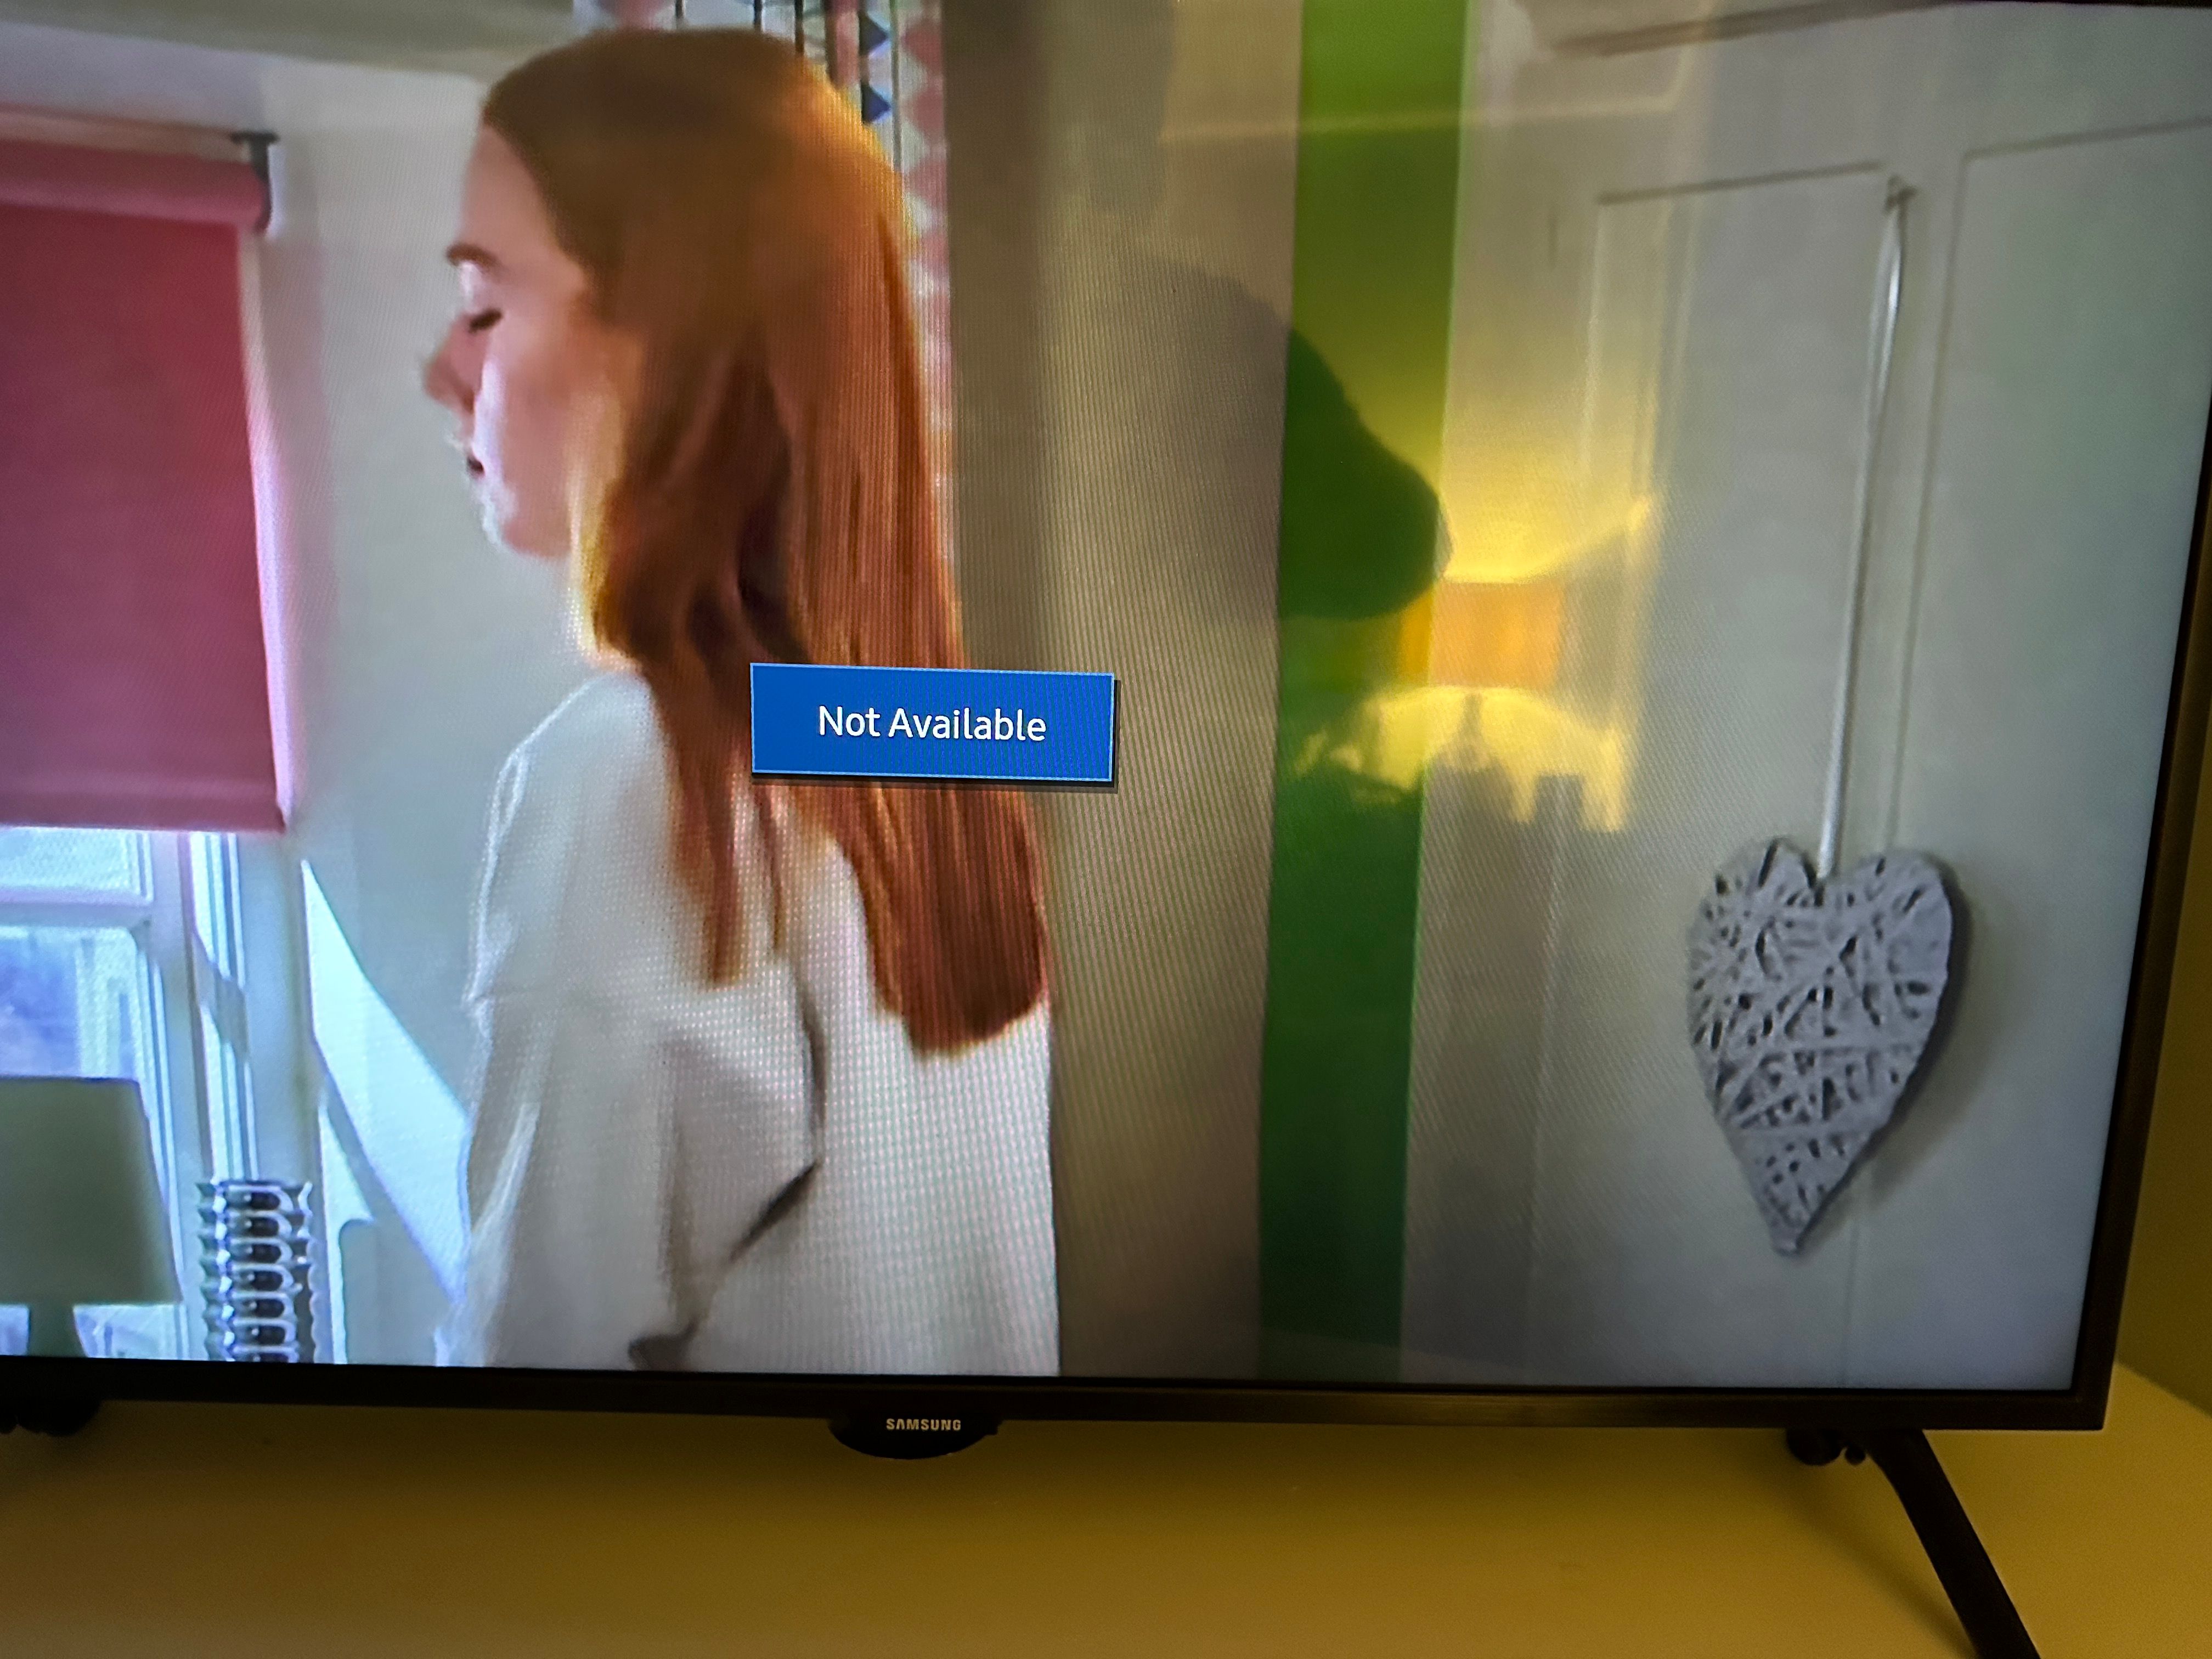 Timeshift / pause live TV with QE32Q50A - Samsung Community